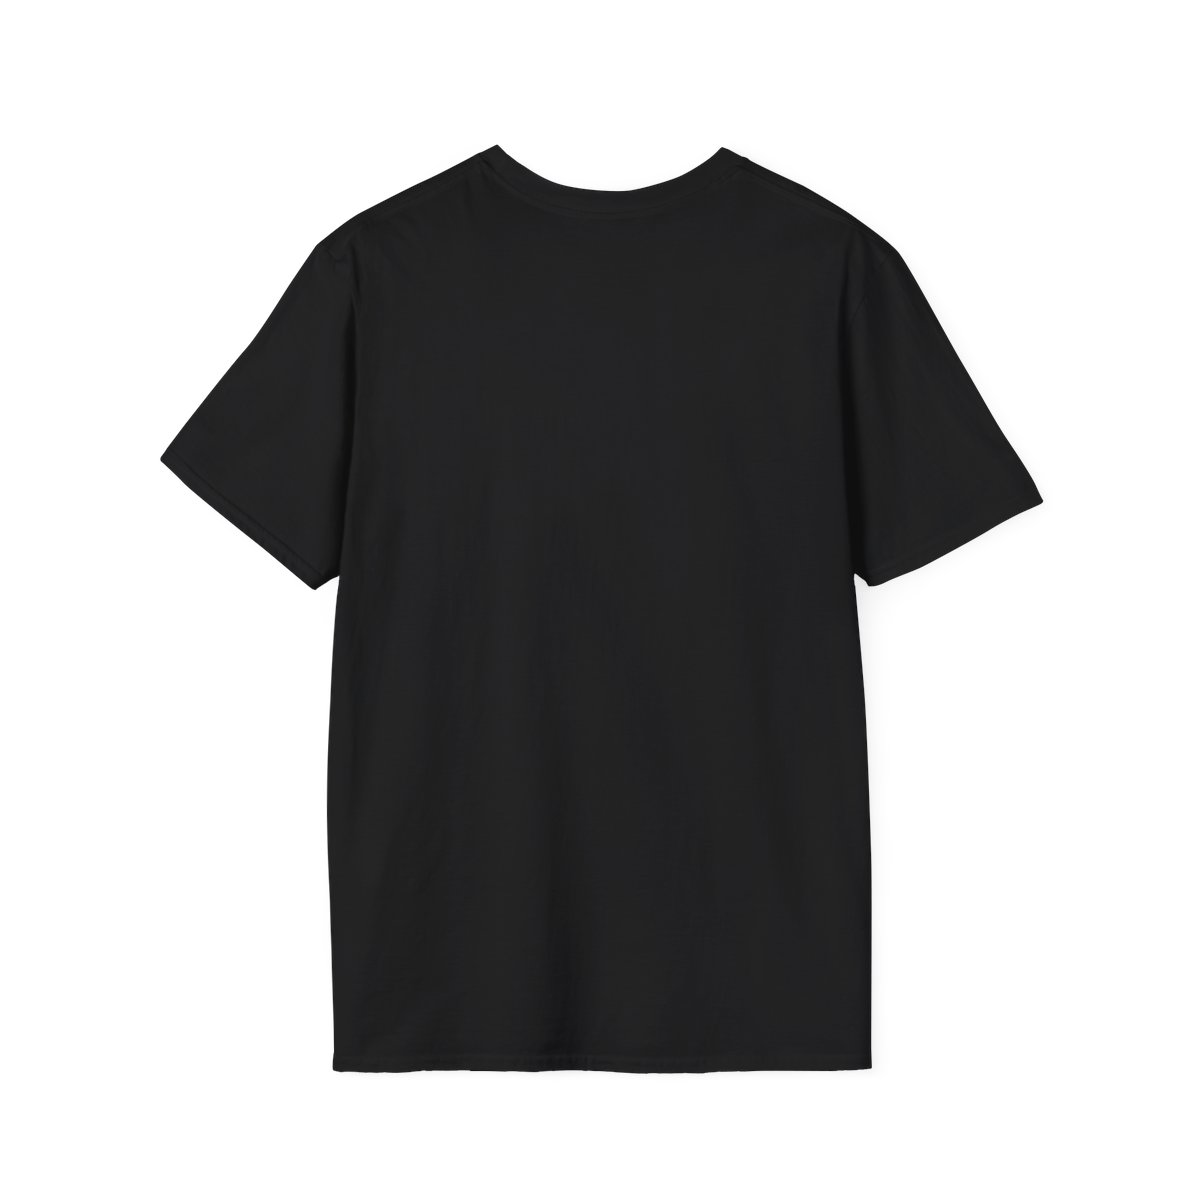 "A'Dam Good Falafel" Unisex Softstyle T-Shirt product thumbnail image